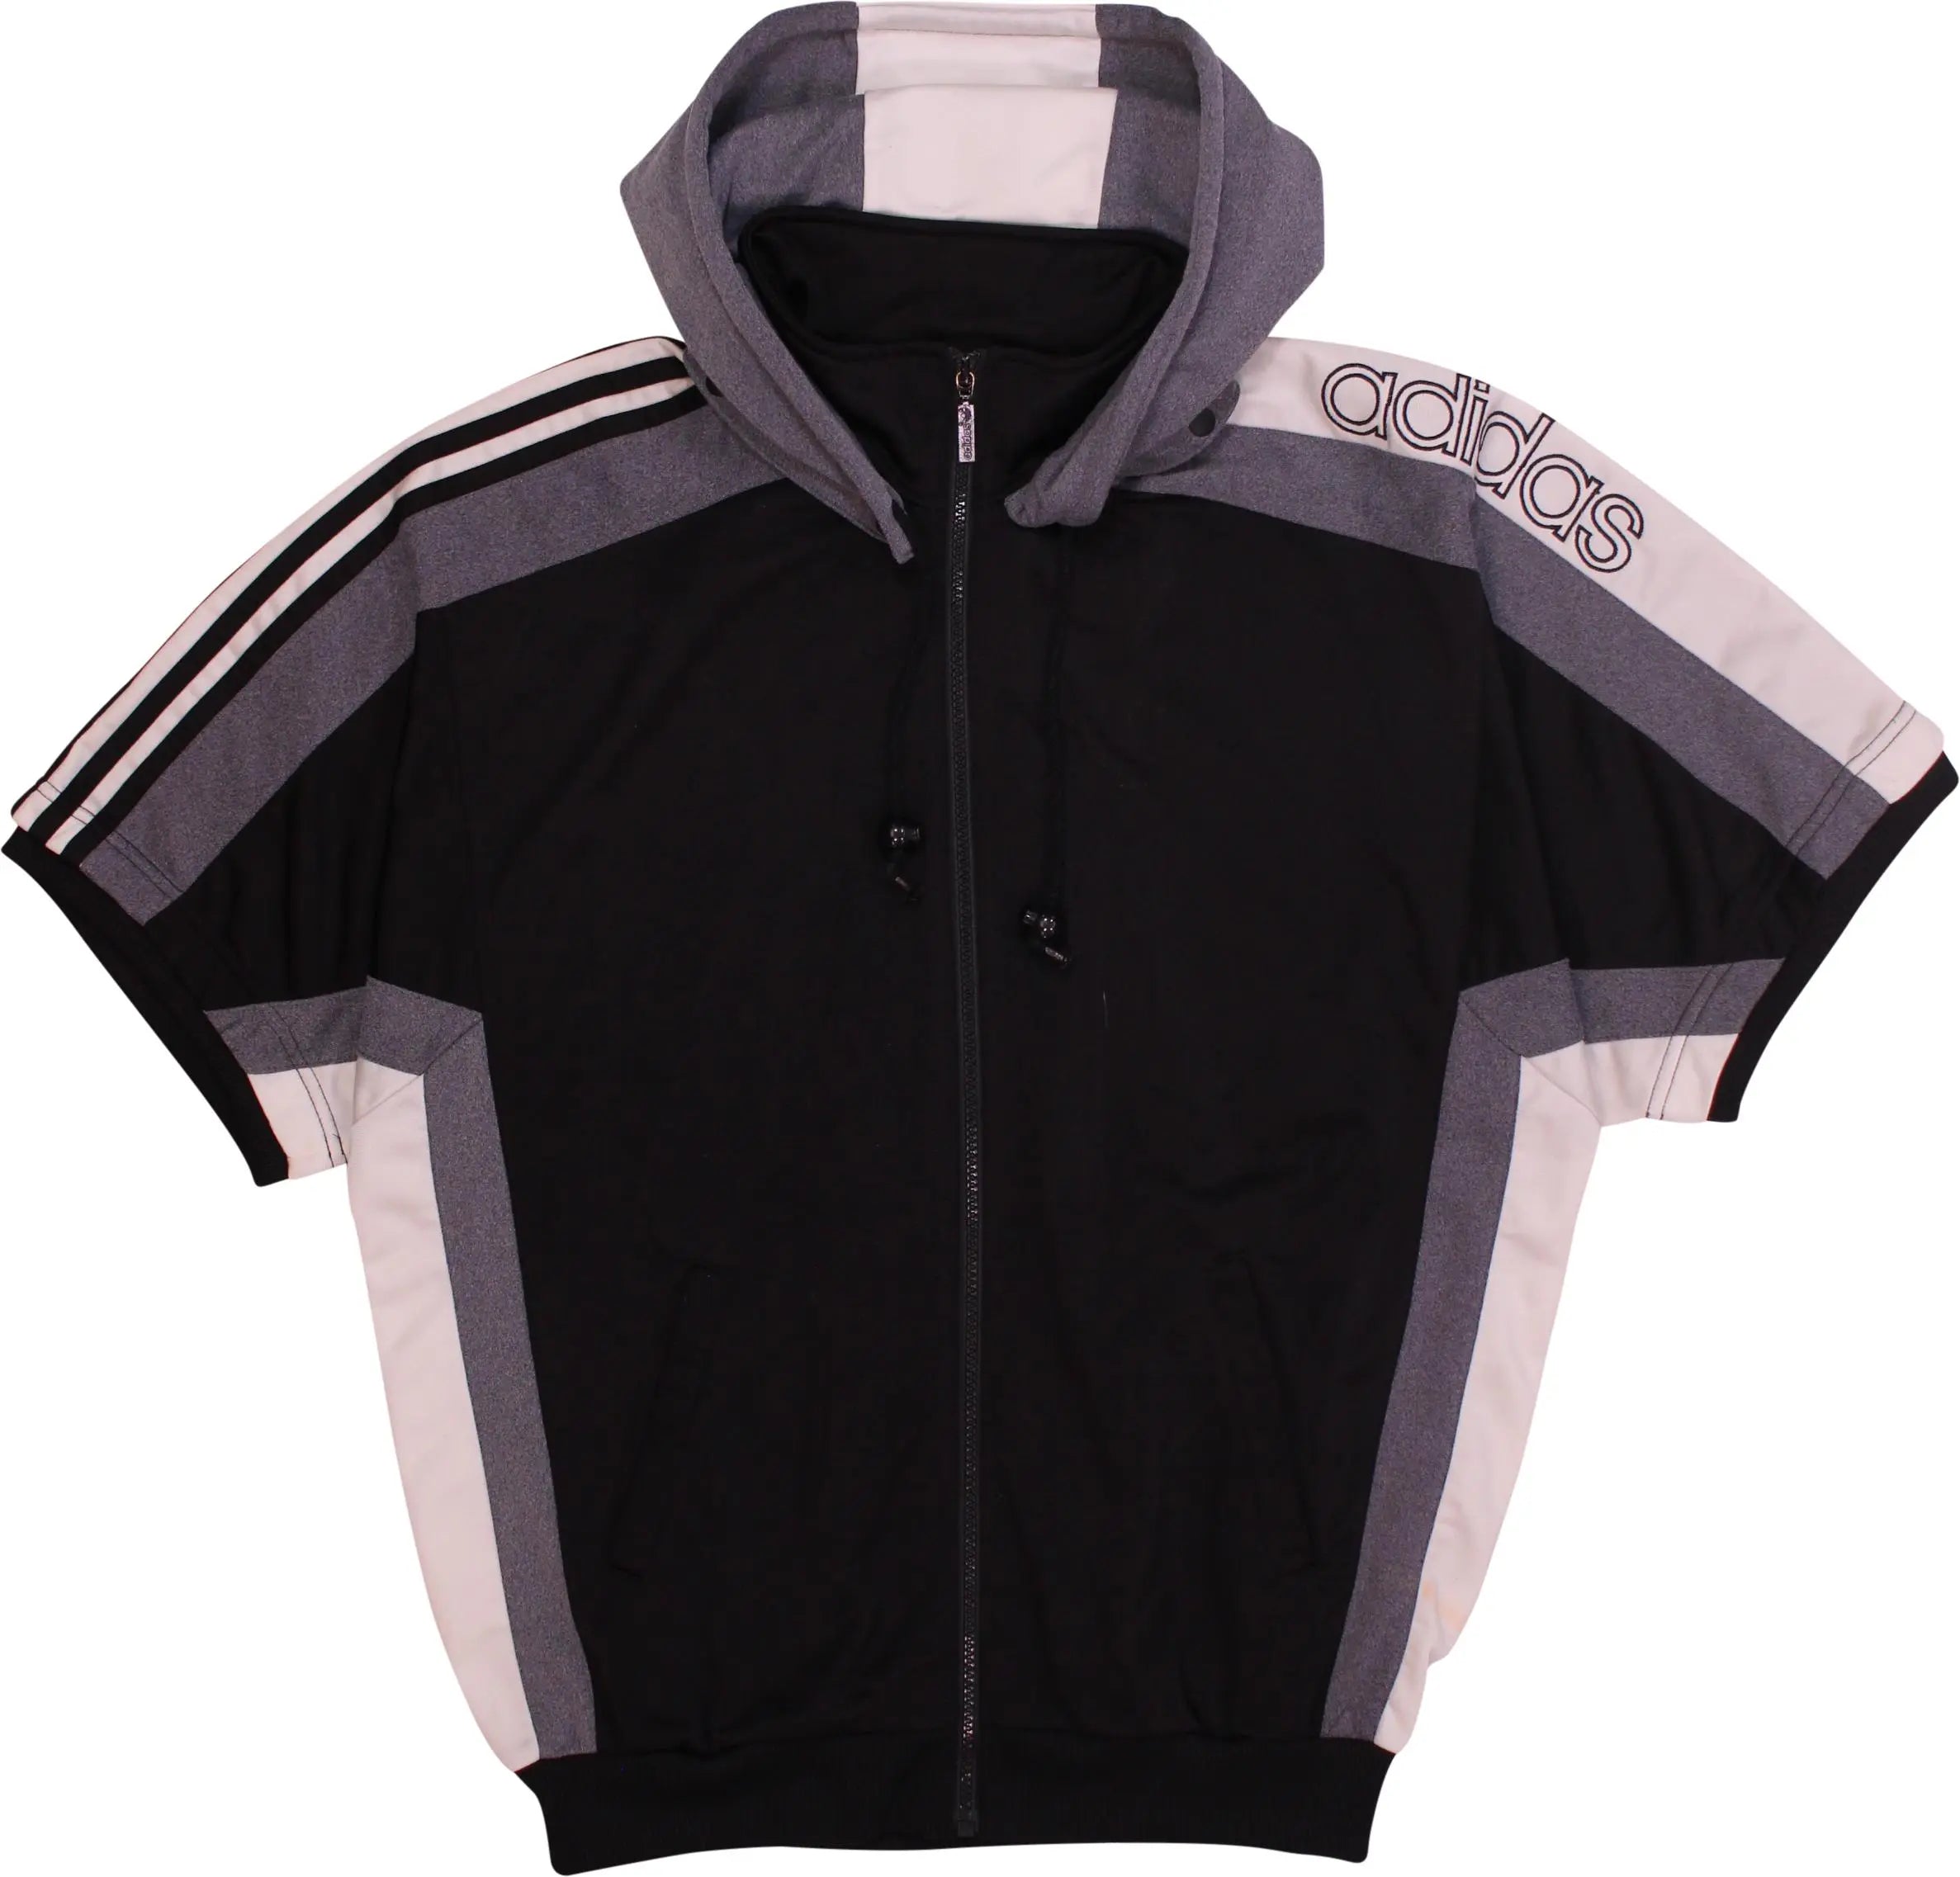 90s Short Sleeve Track Jacket by Adidas